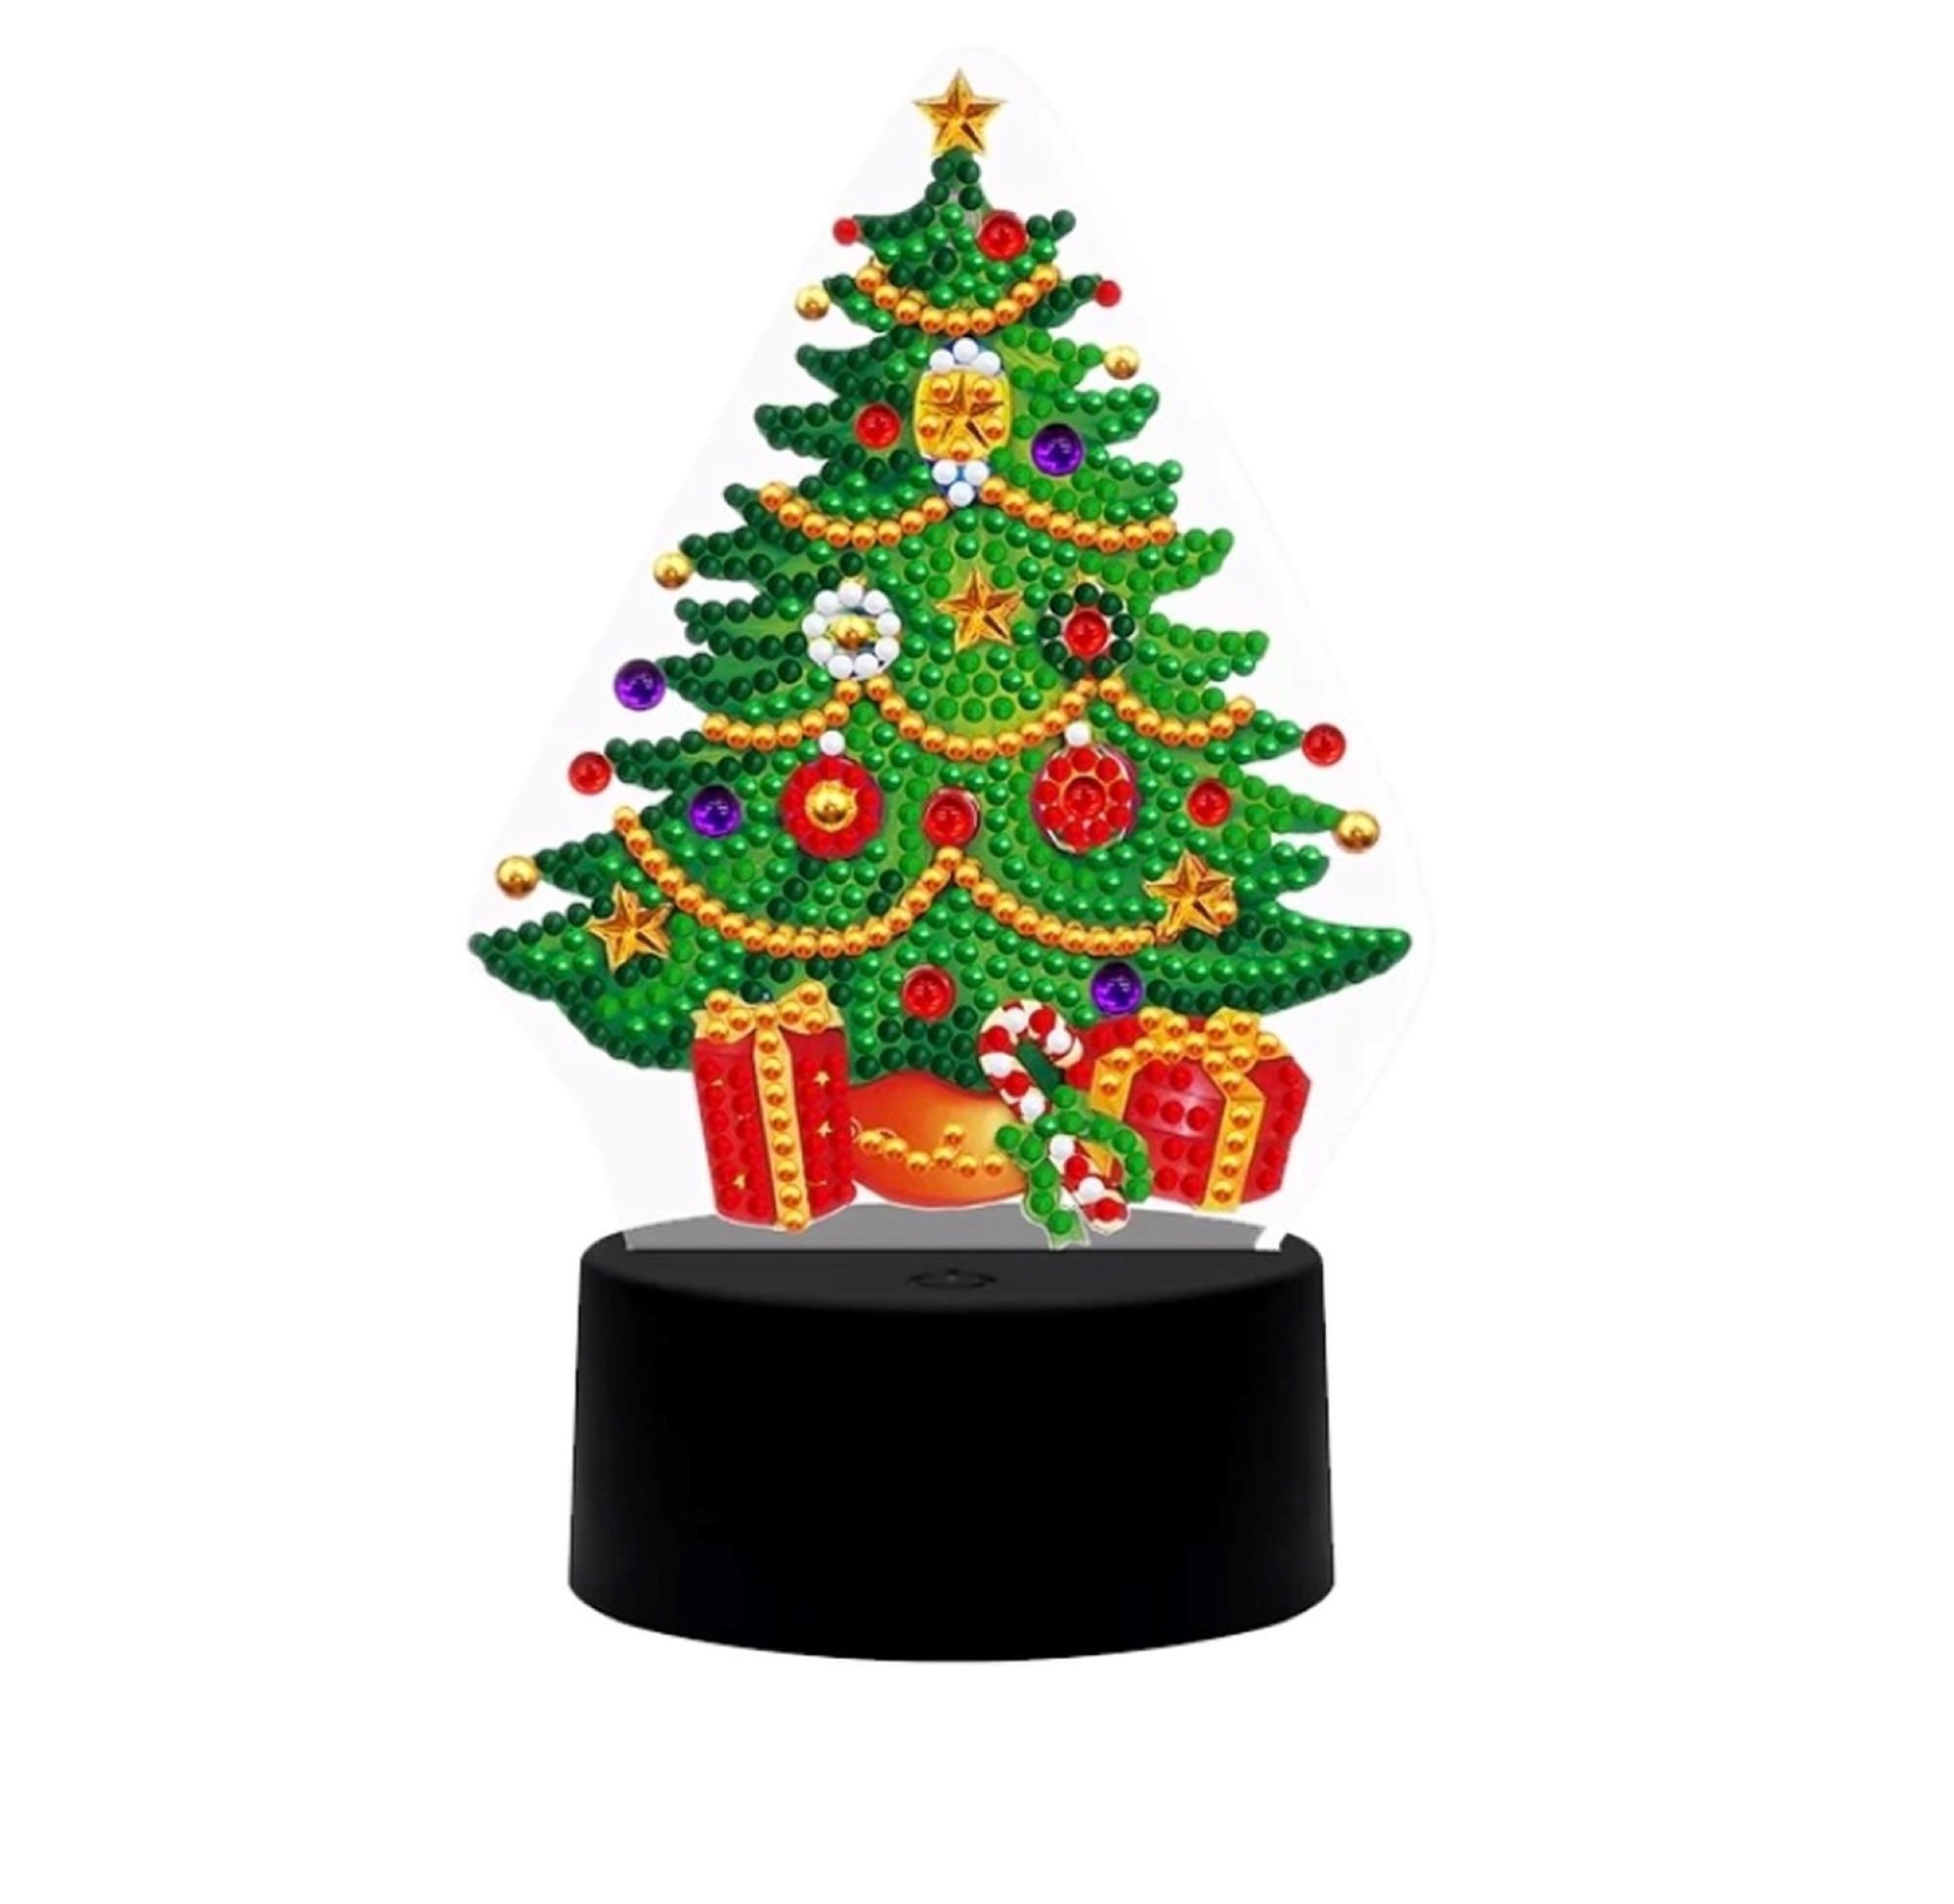 Diamond Painting Christmas Ornaments, Diy Diamond Painting Kits, Holiday  Decor, Snowman, Christmas Tree Table Ornament, Home Decor, Gift 